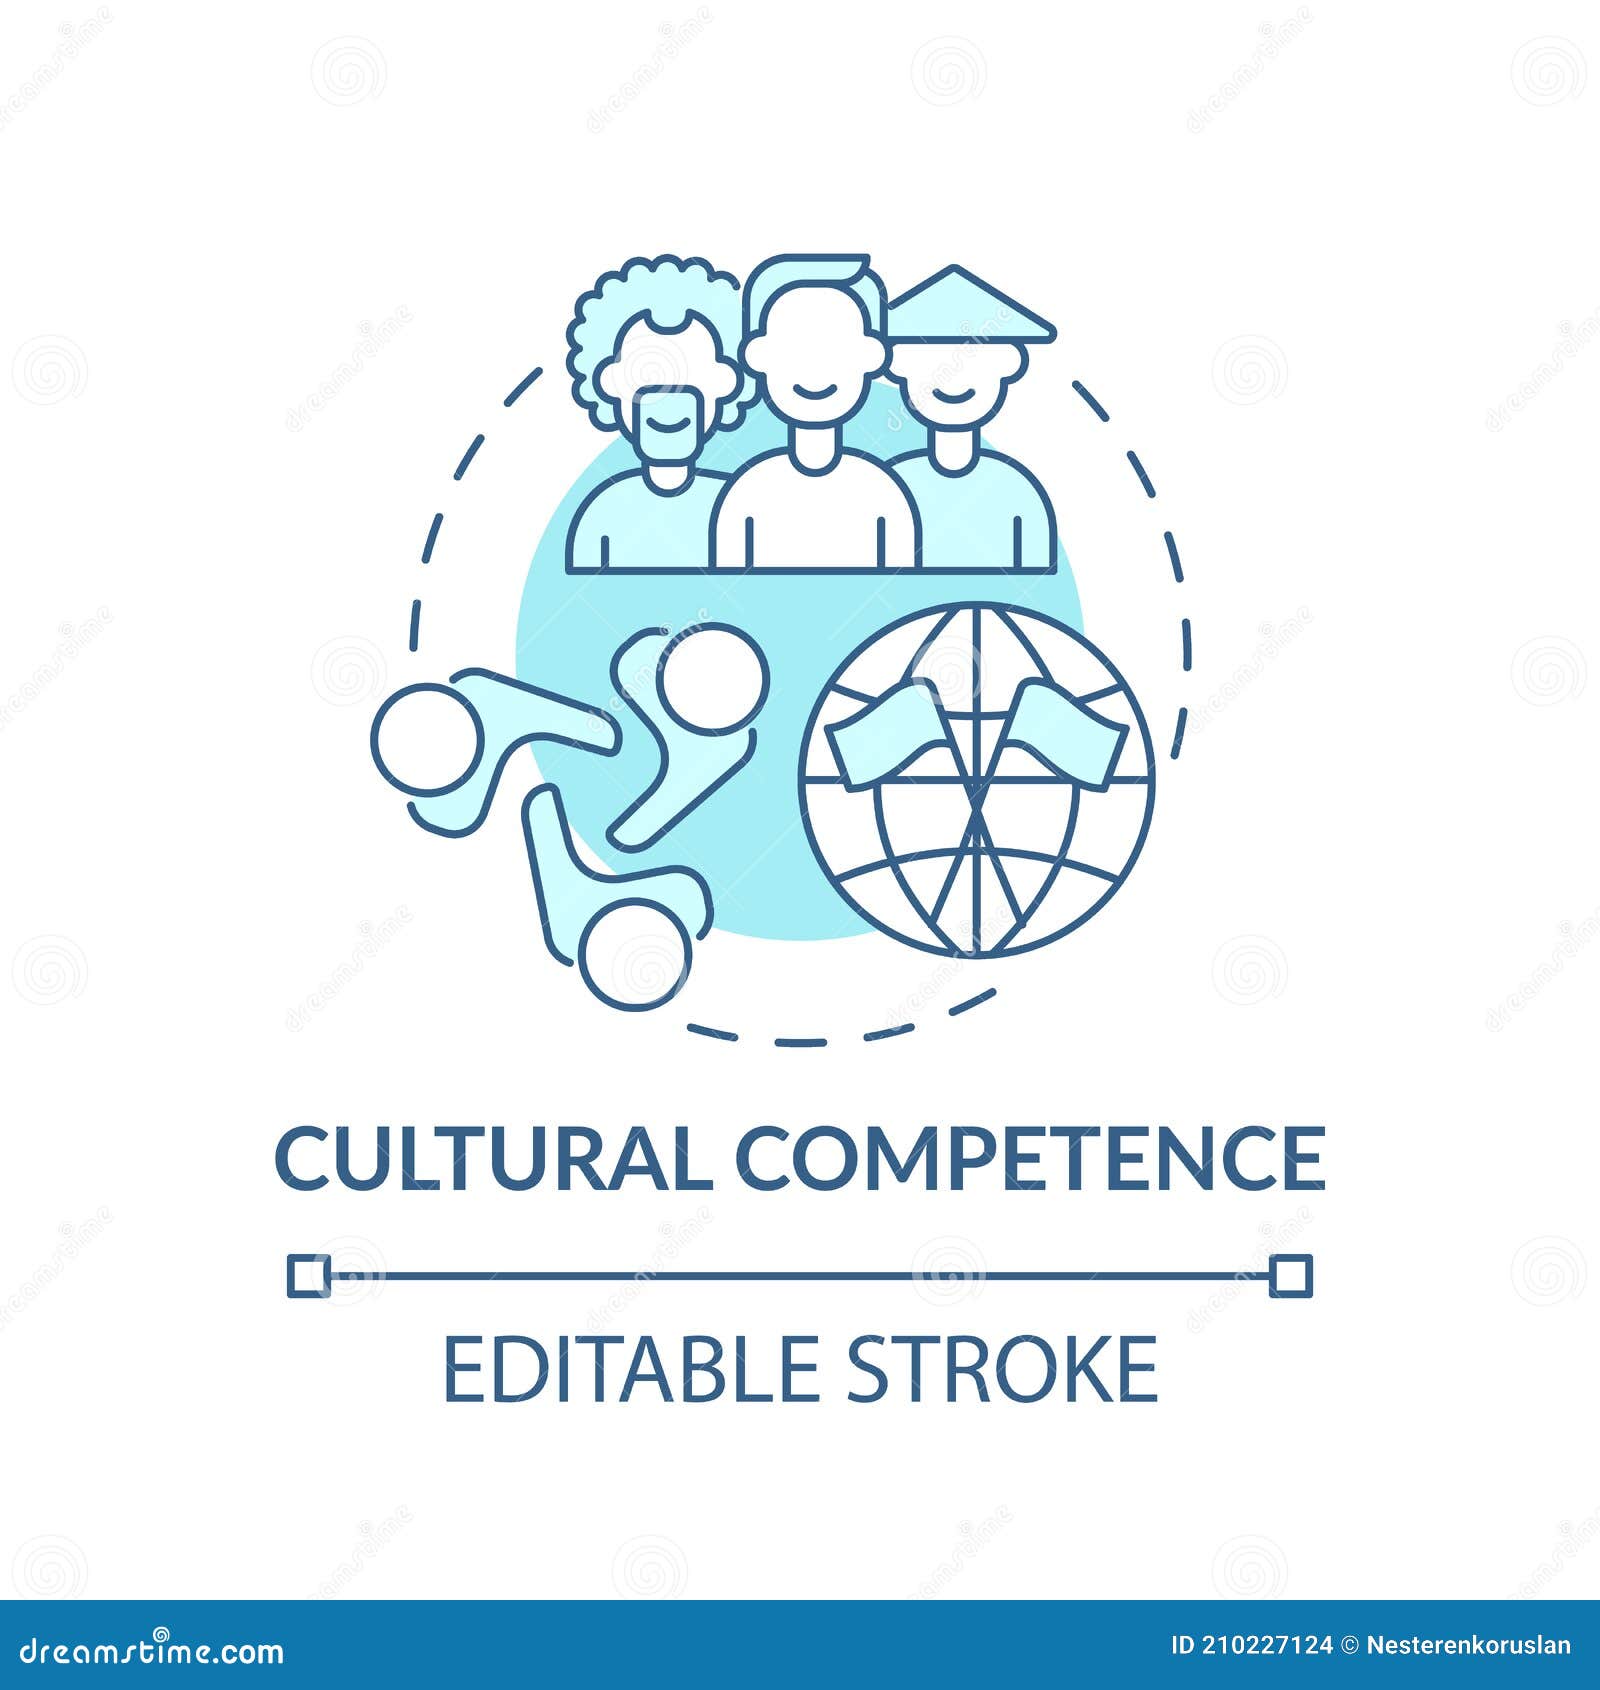 cultural competence concept icon